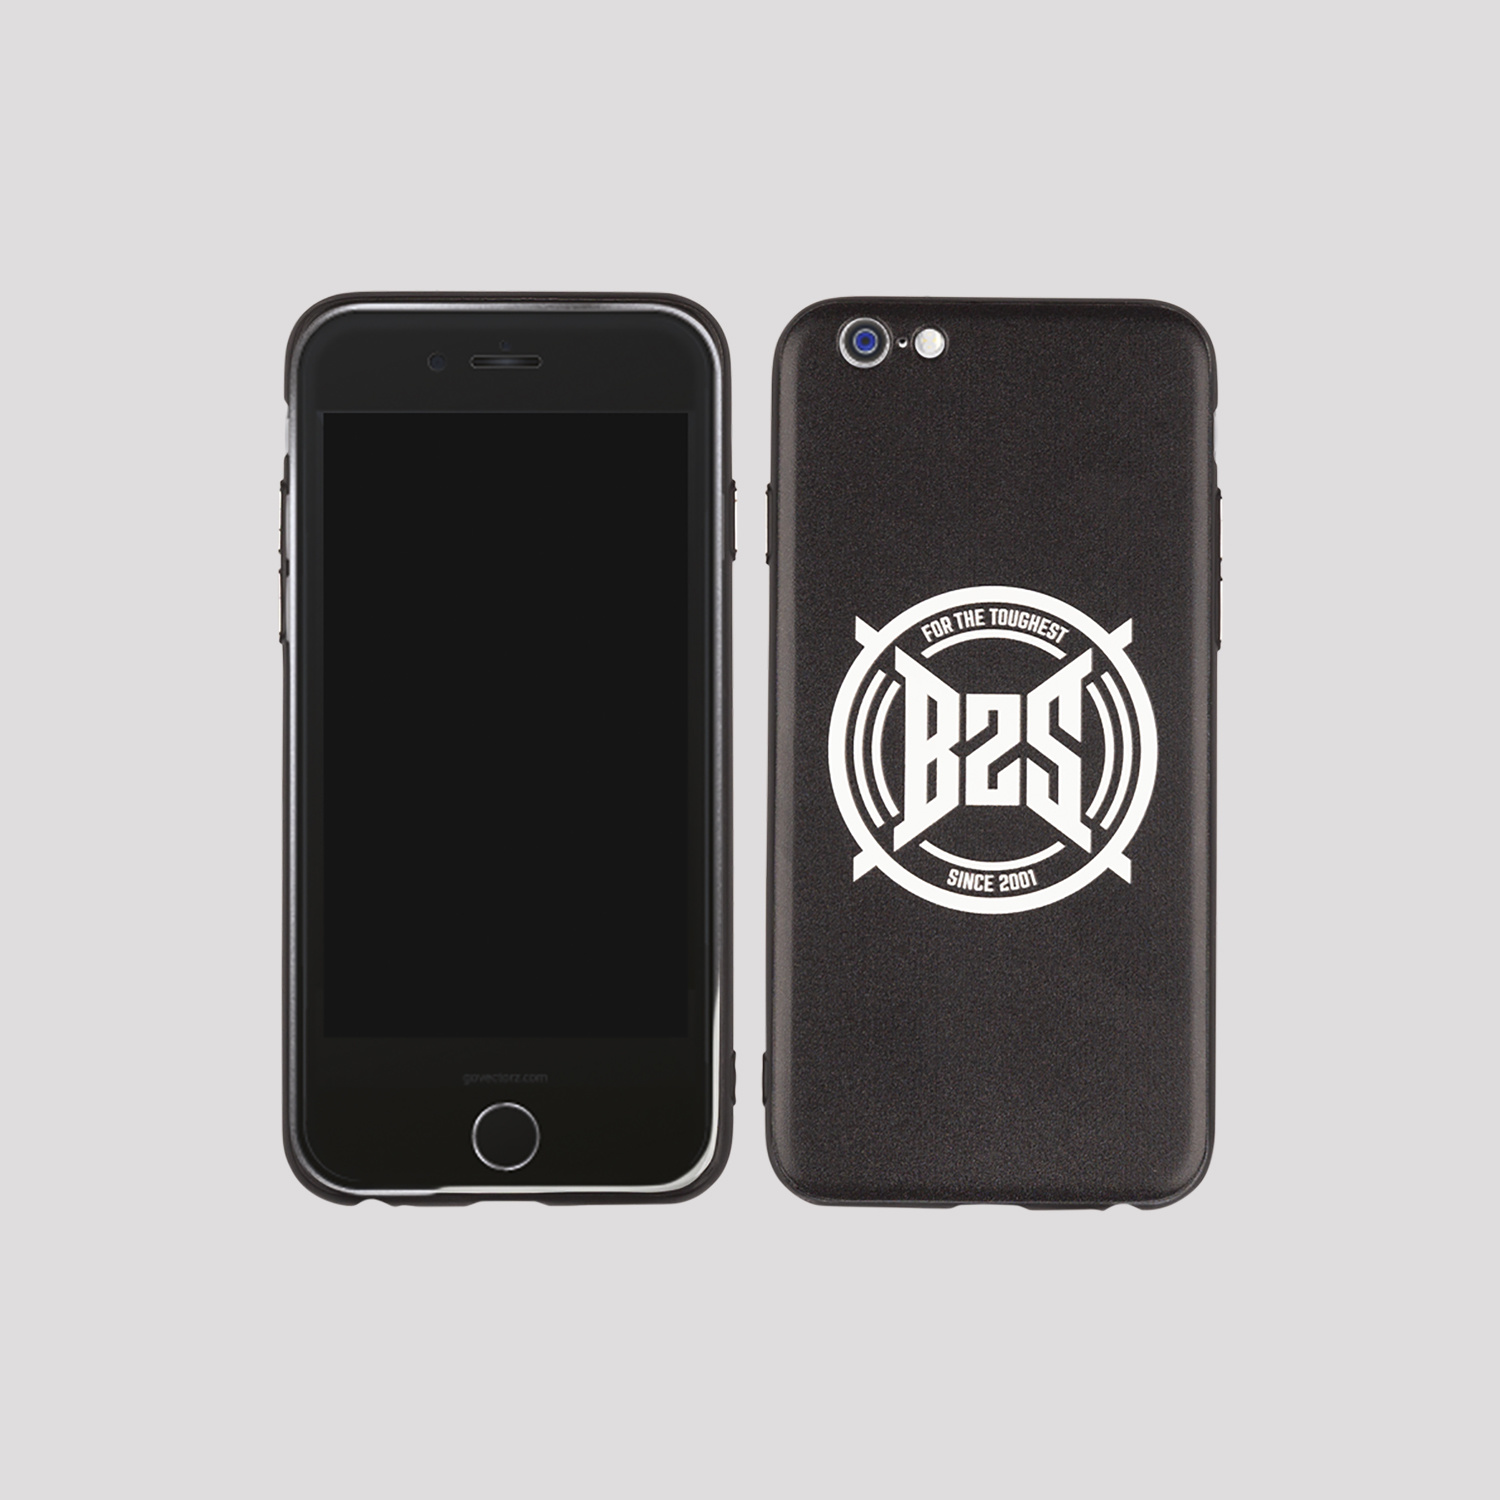 B2S iphone case black/white